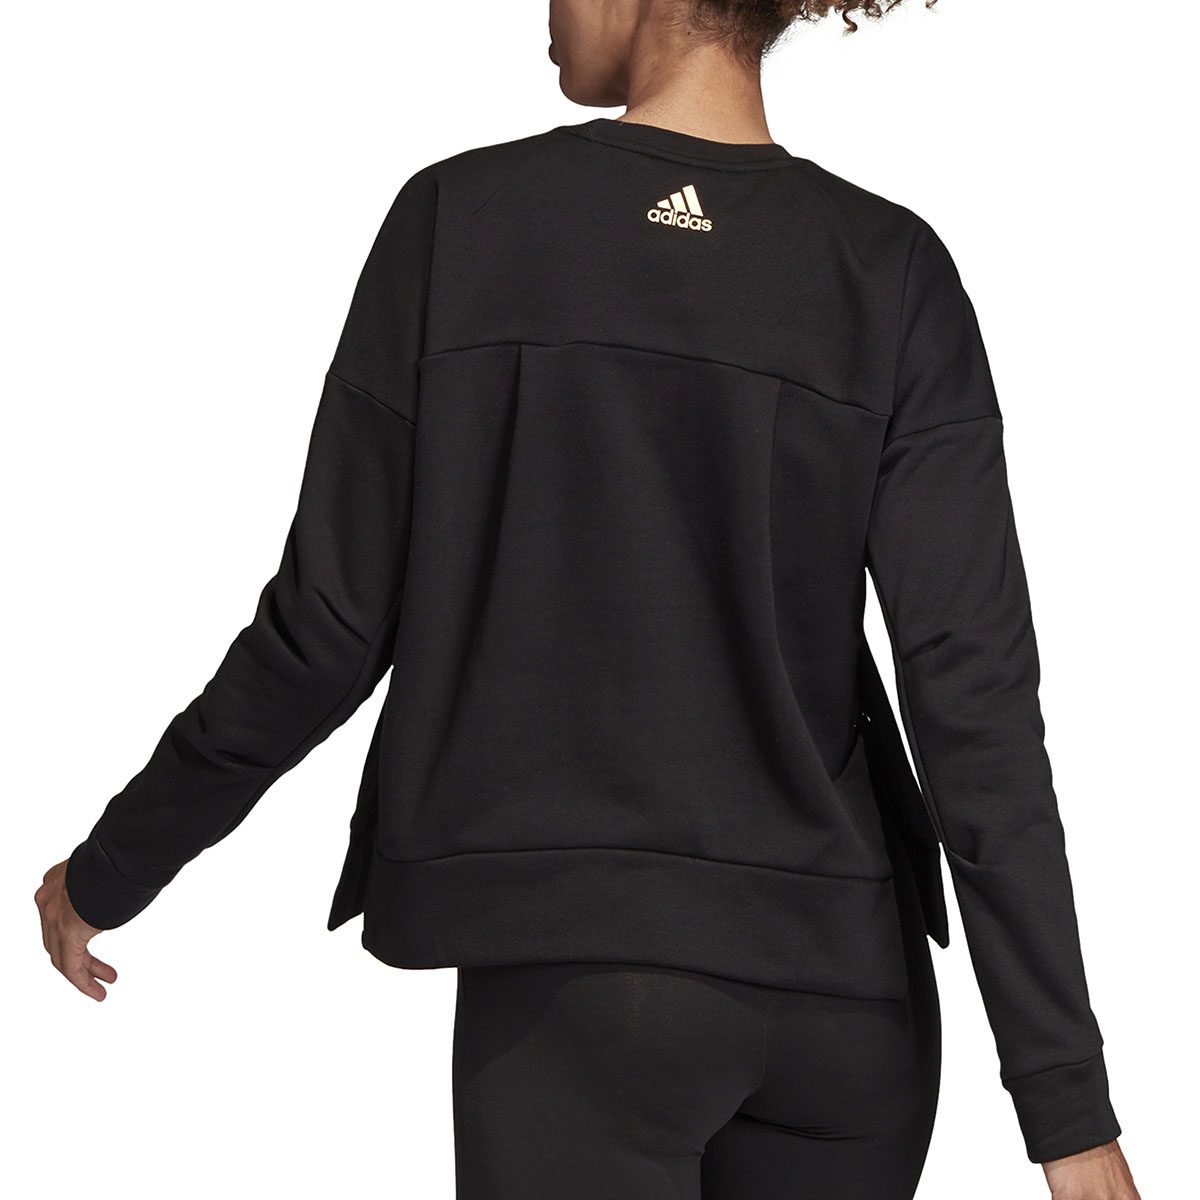 adidas women's black sweatshirt